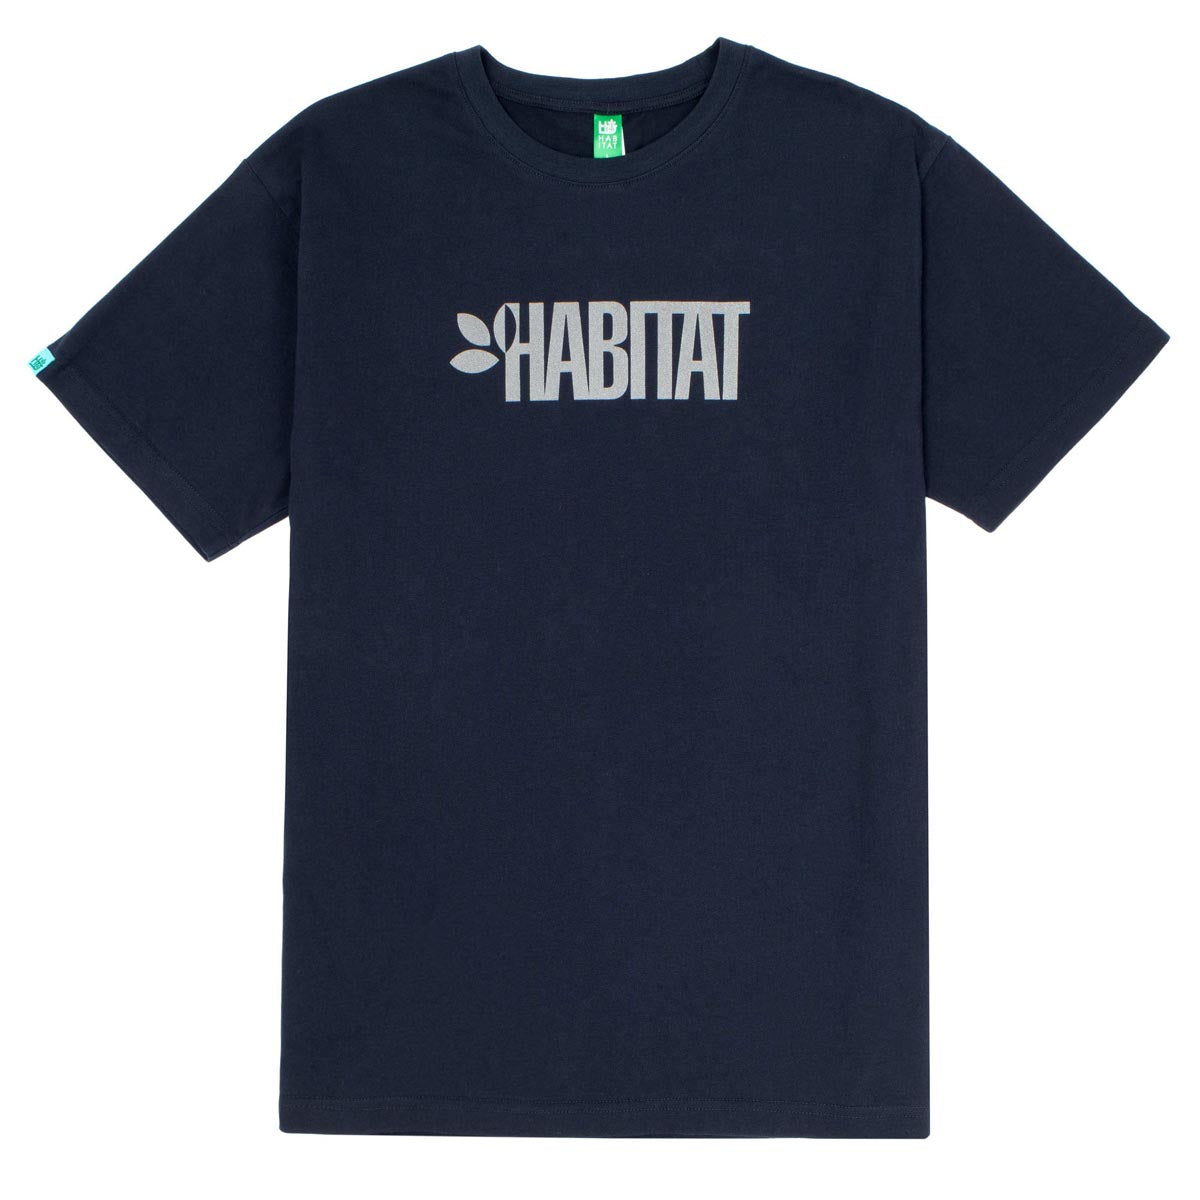 Habitat Apex T-Shirt - Navy image 1